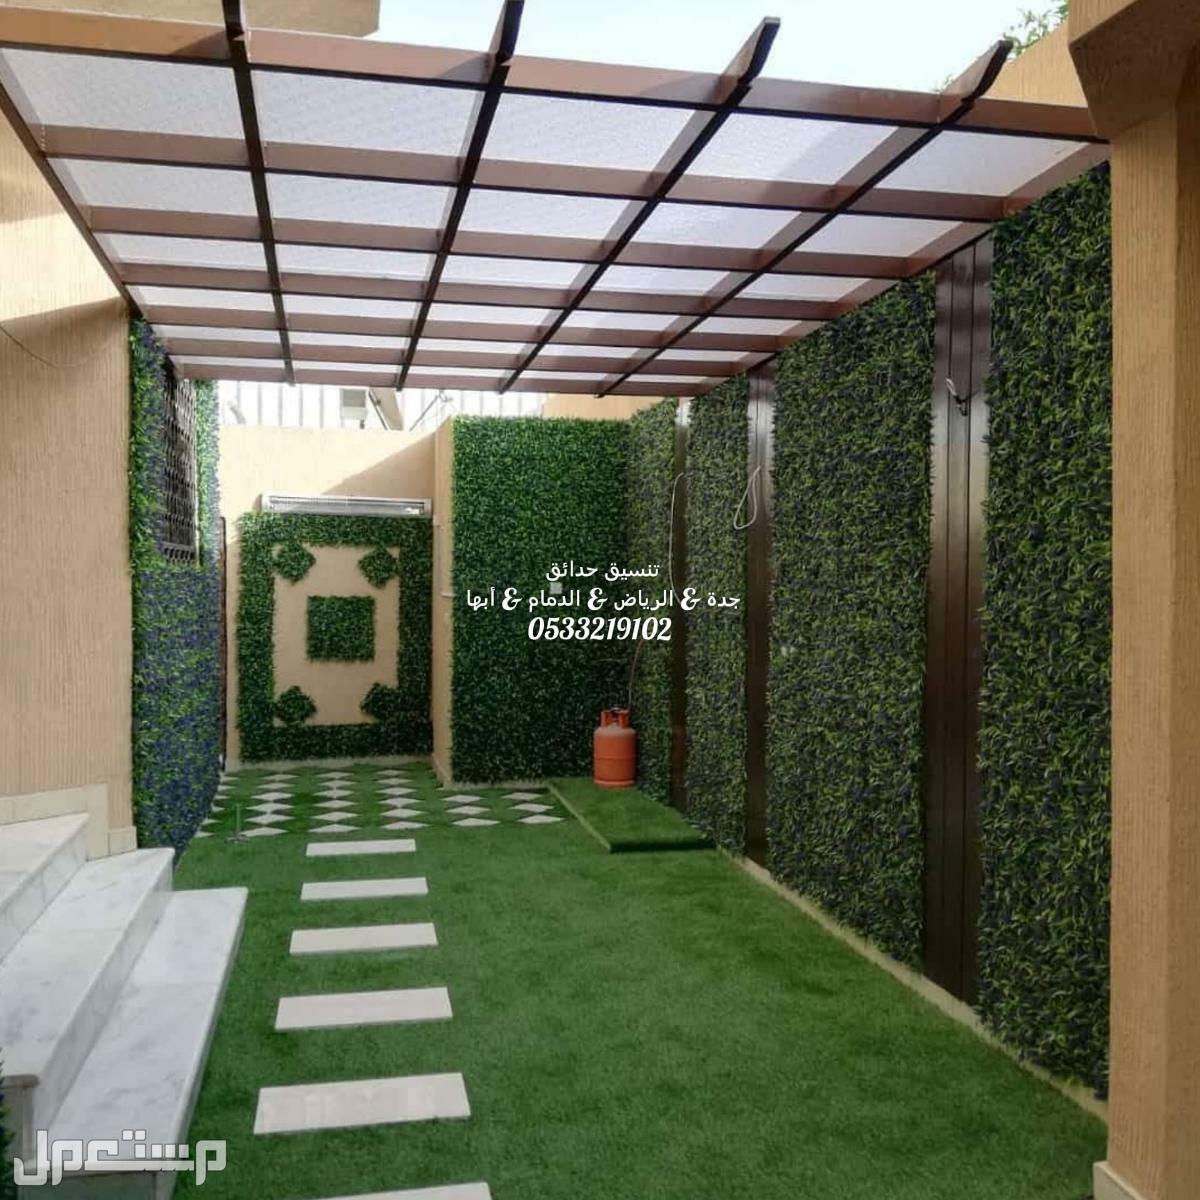 سواتر مظلات شلالات نوافير خشب باركية حدائق داخليه جدة مكة تنسيق حدائق عشب